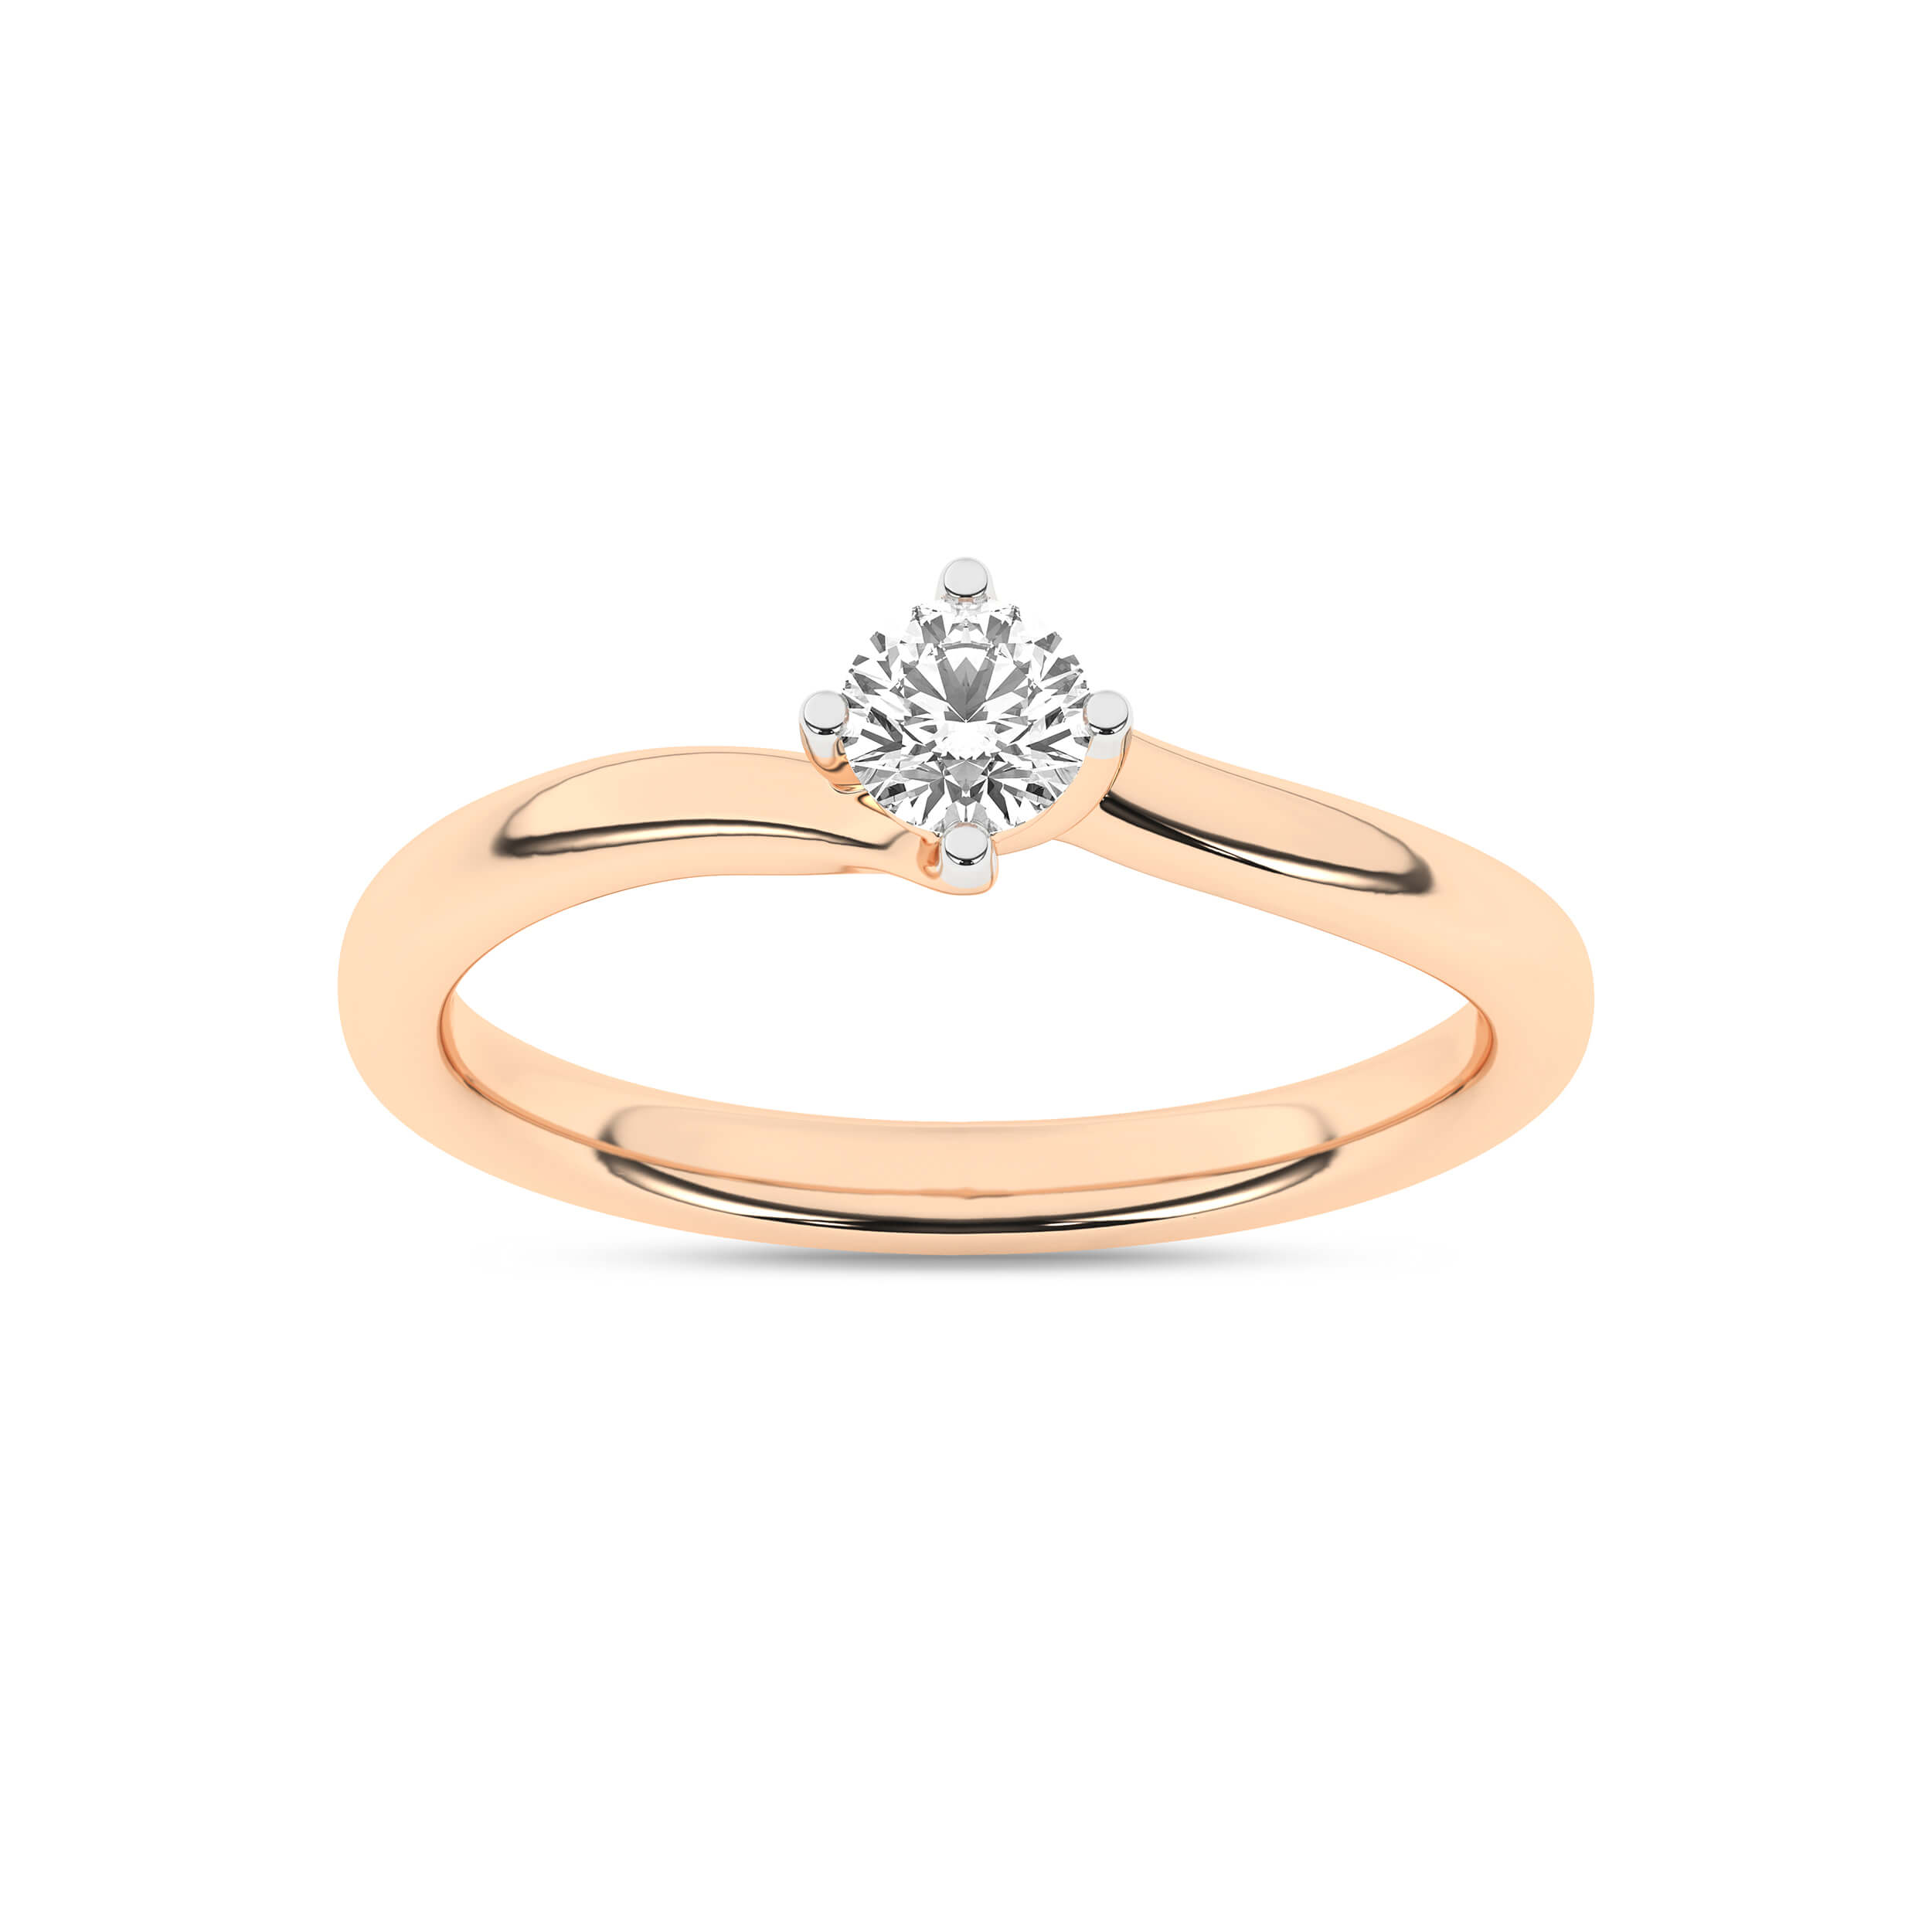 Inel de logodna din Aur Roz 14K cu Diamant 0.25Ct, articol RS0608, previzualizare foto 1